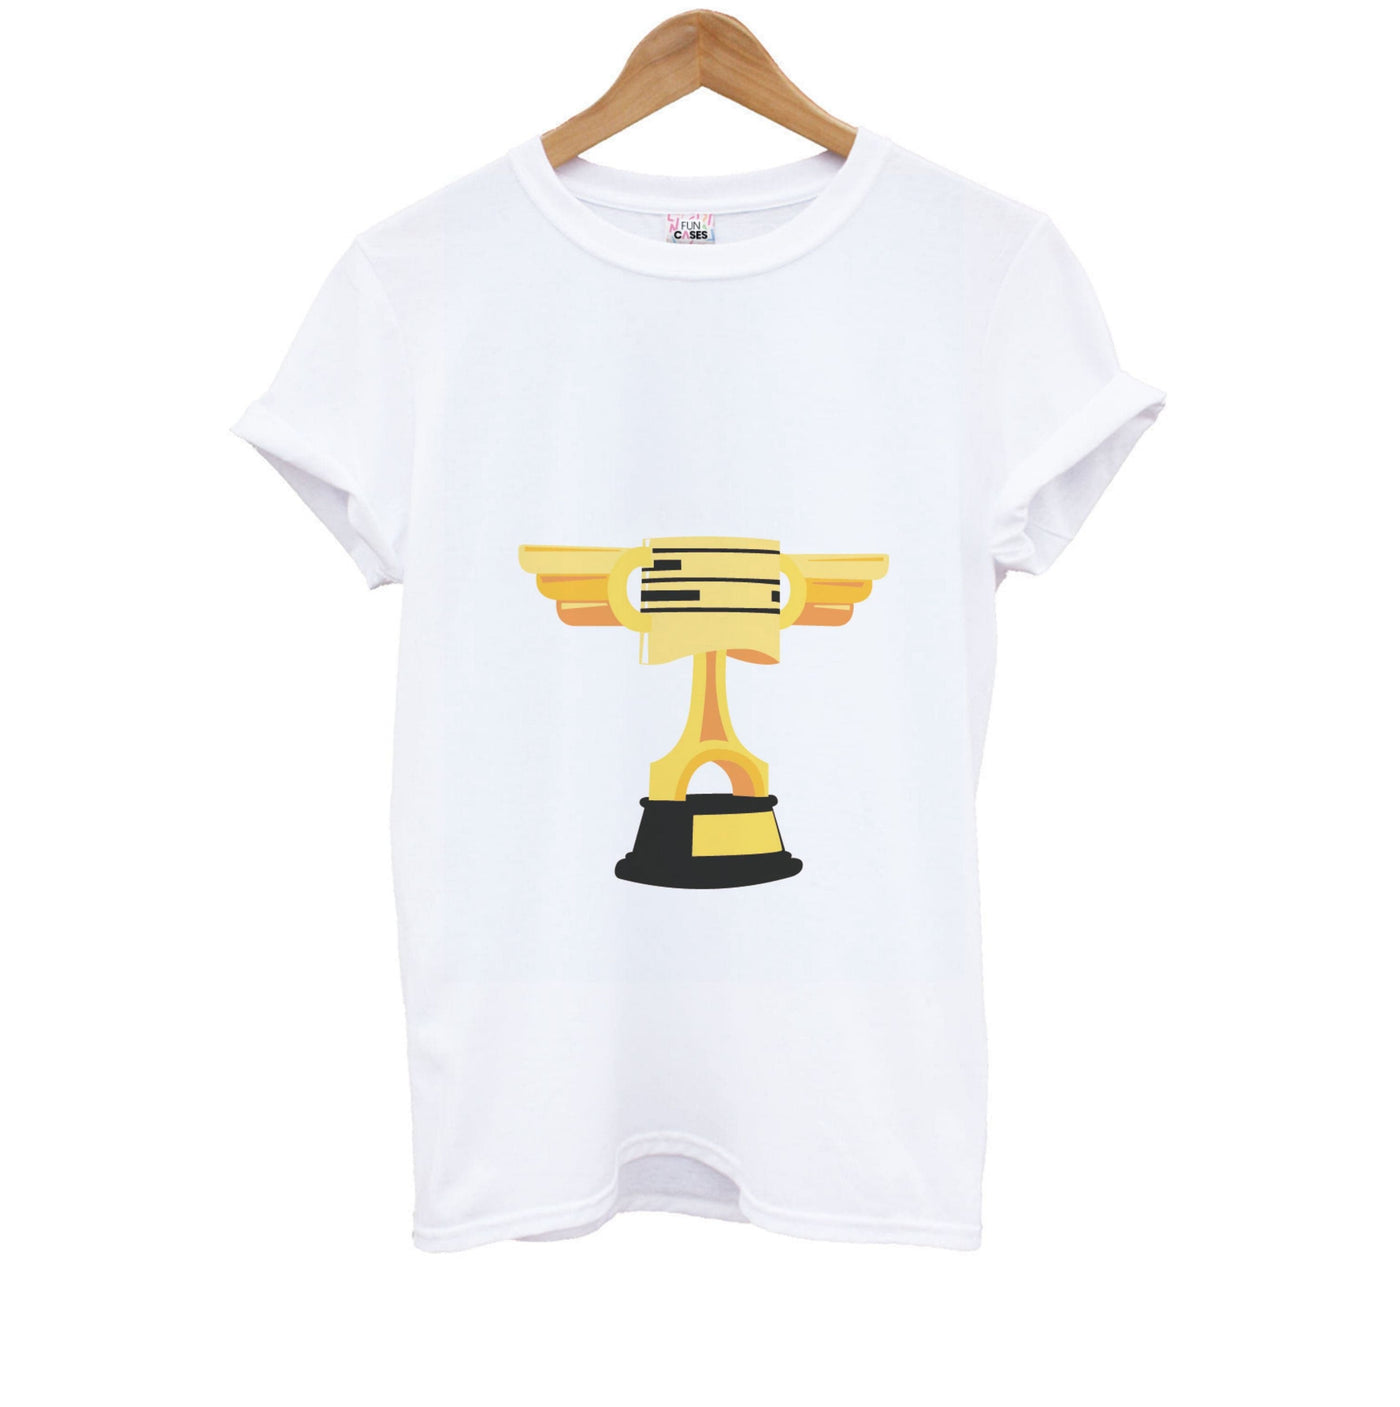 Trophy - Cars Kids T-Shirt